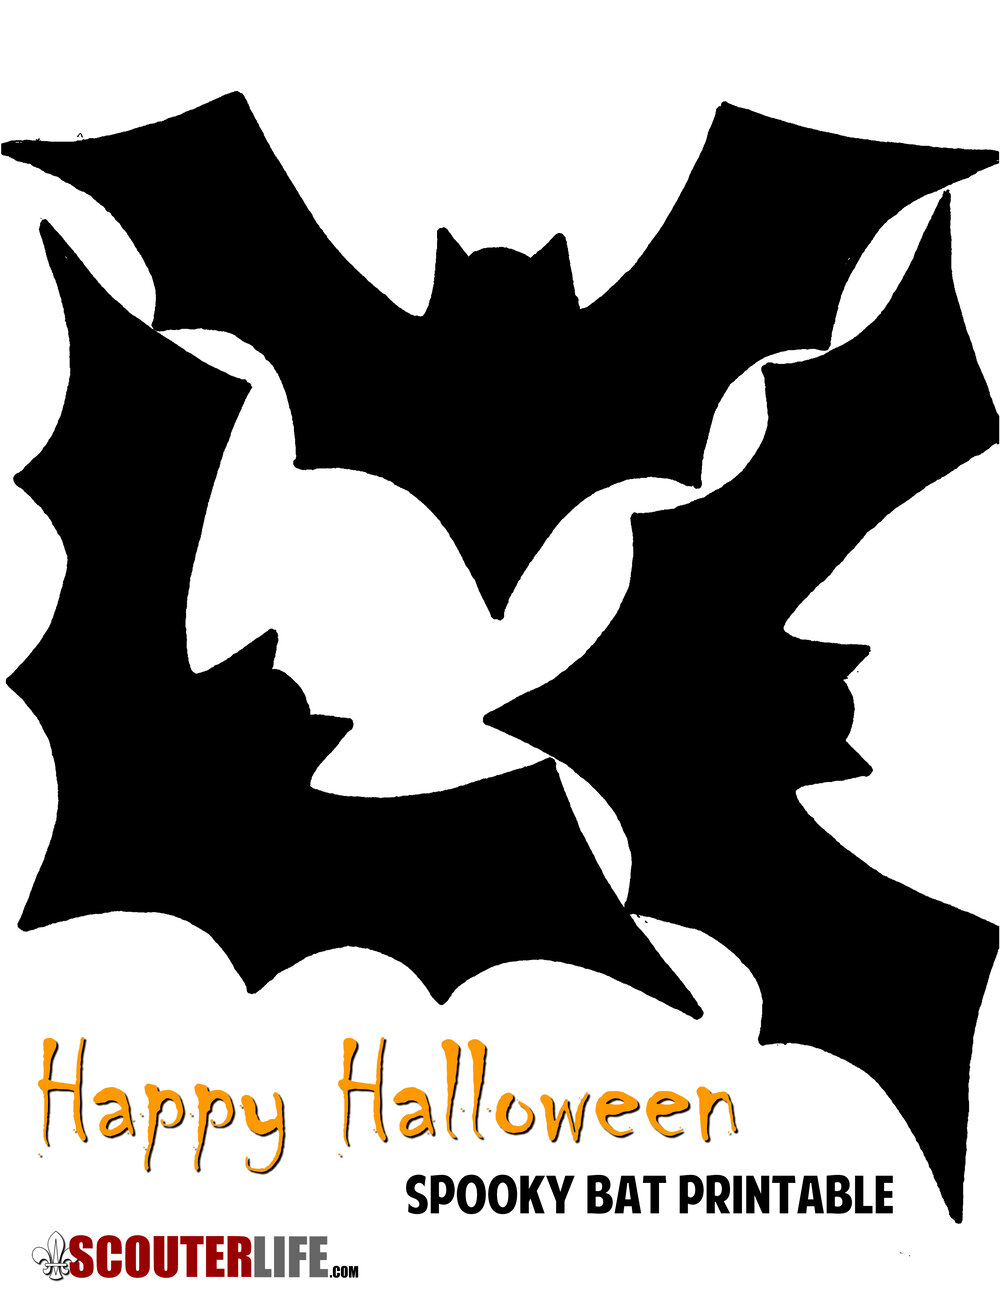 Halloween Spooky Bat Printable Scouterlife